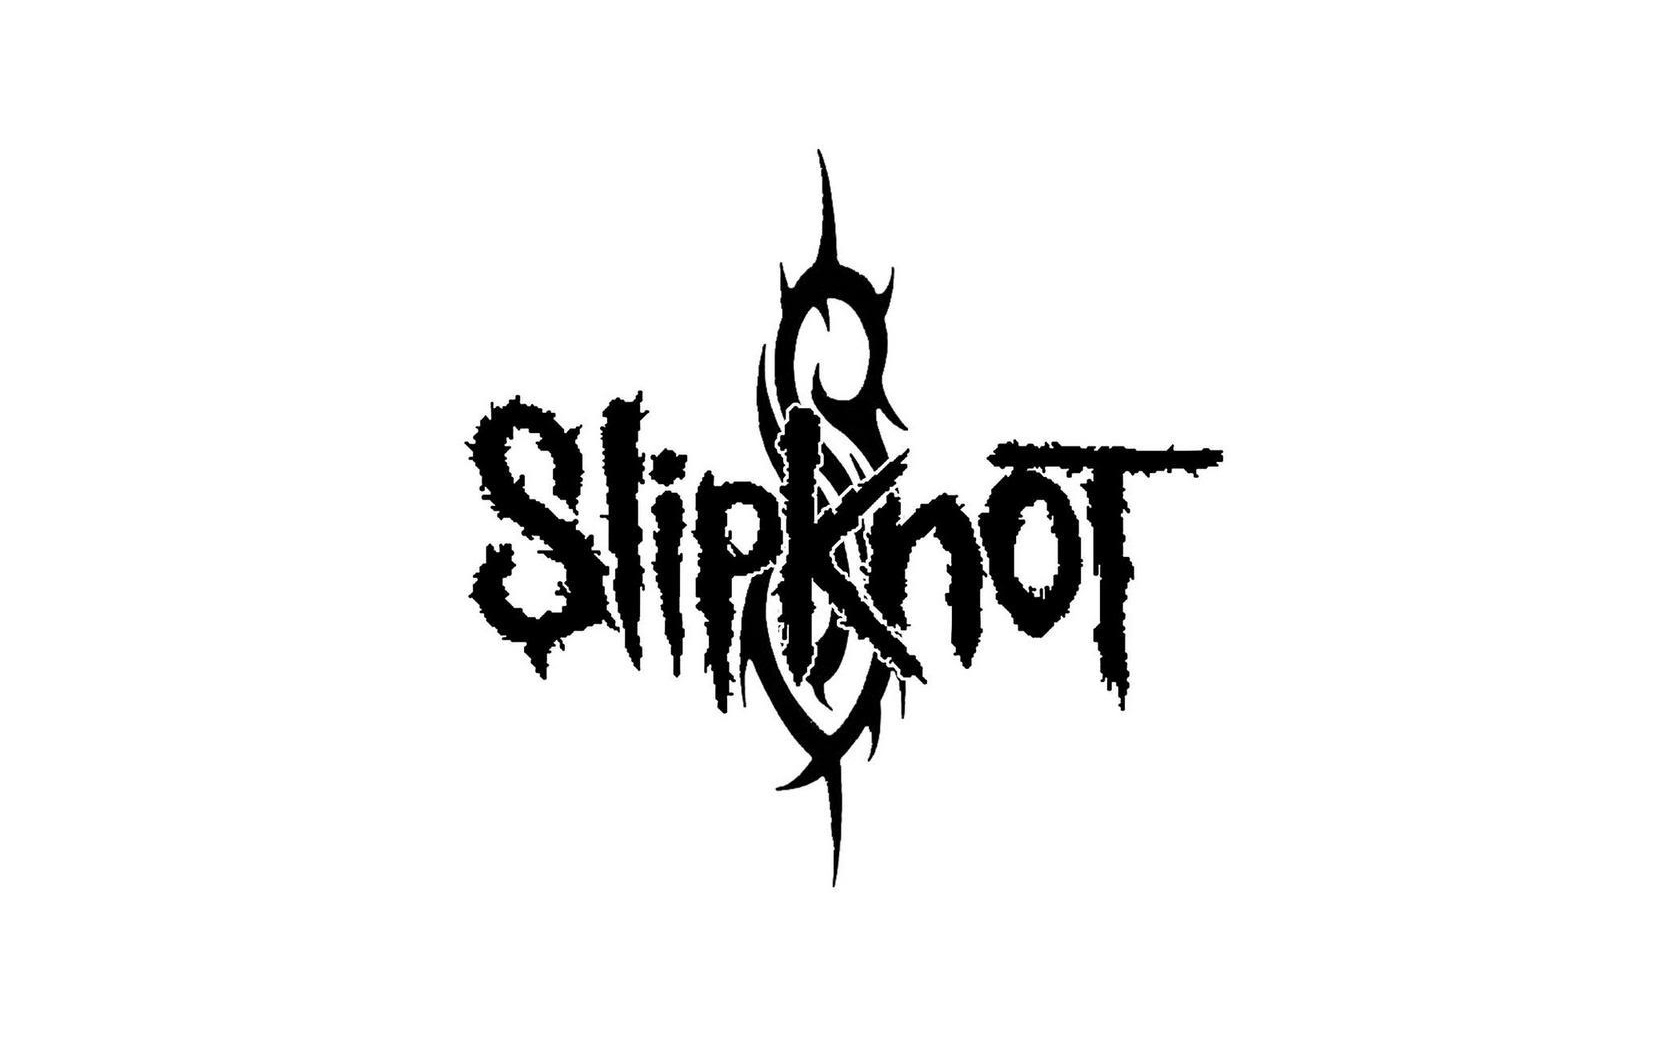  Logo HD Wallpapers Slipknot Logo Desktop Wallpapers Slipknot Logo 1680x1050